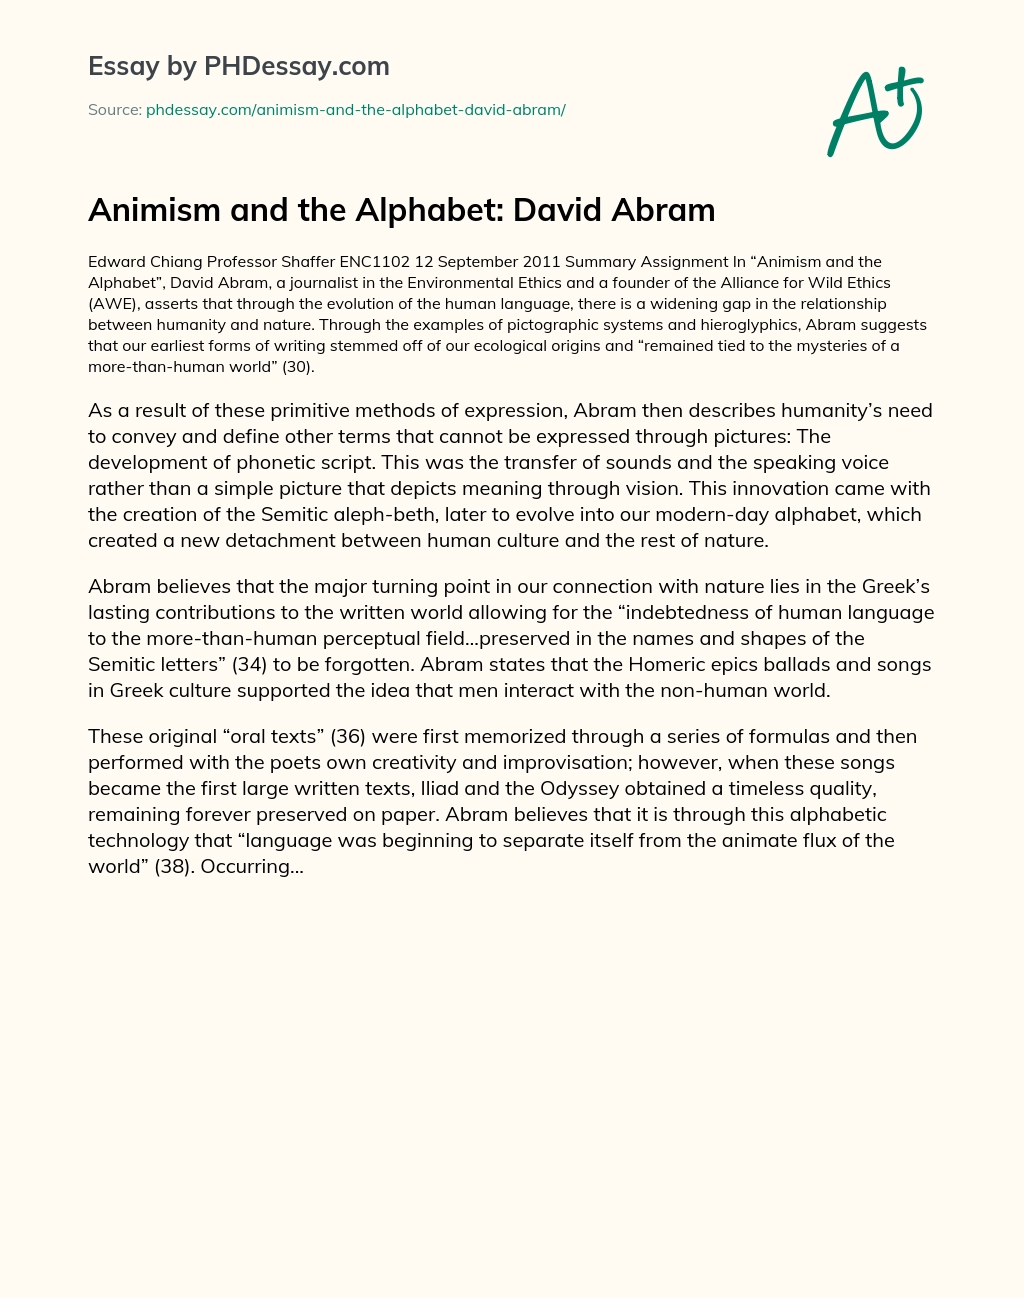 Animism and the Alphabet: David Abram essay